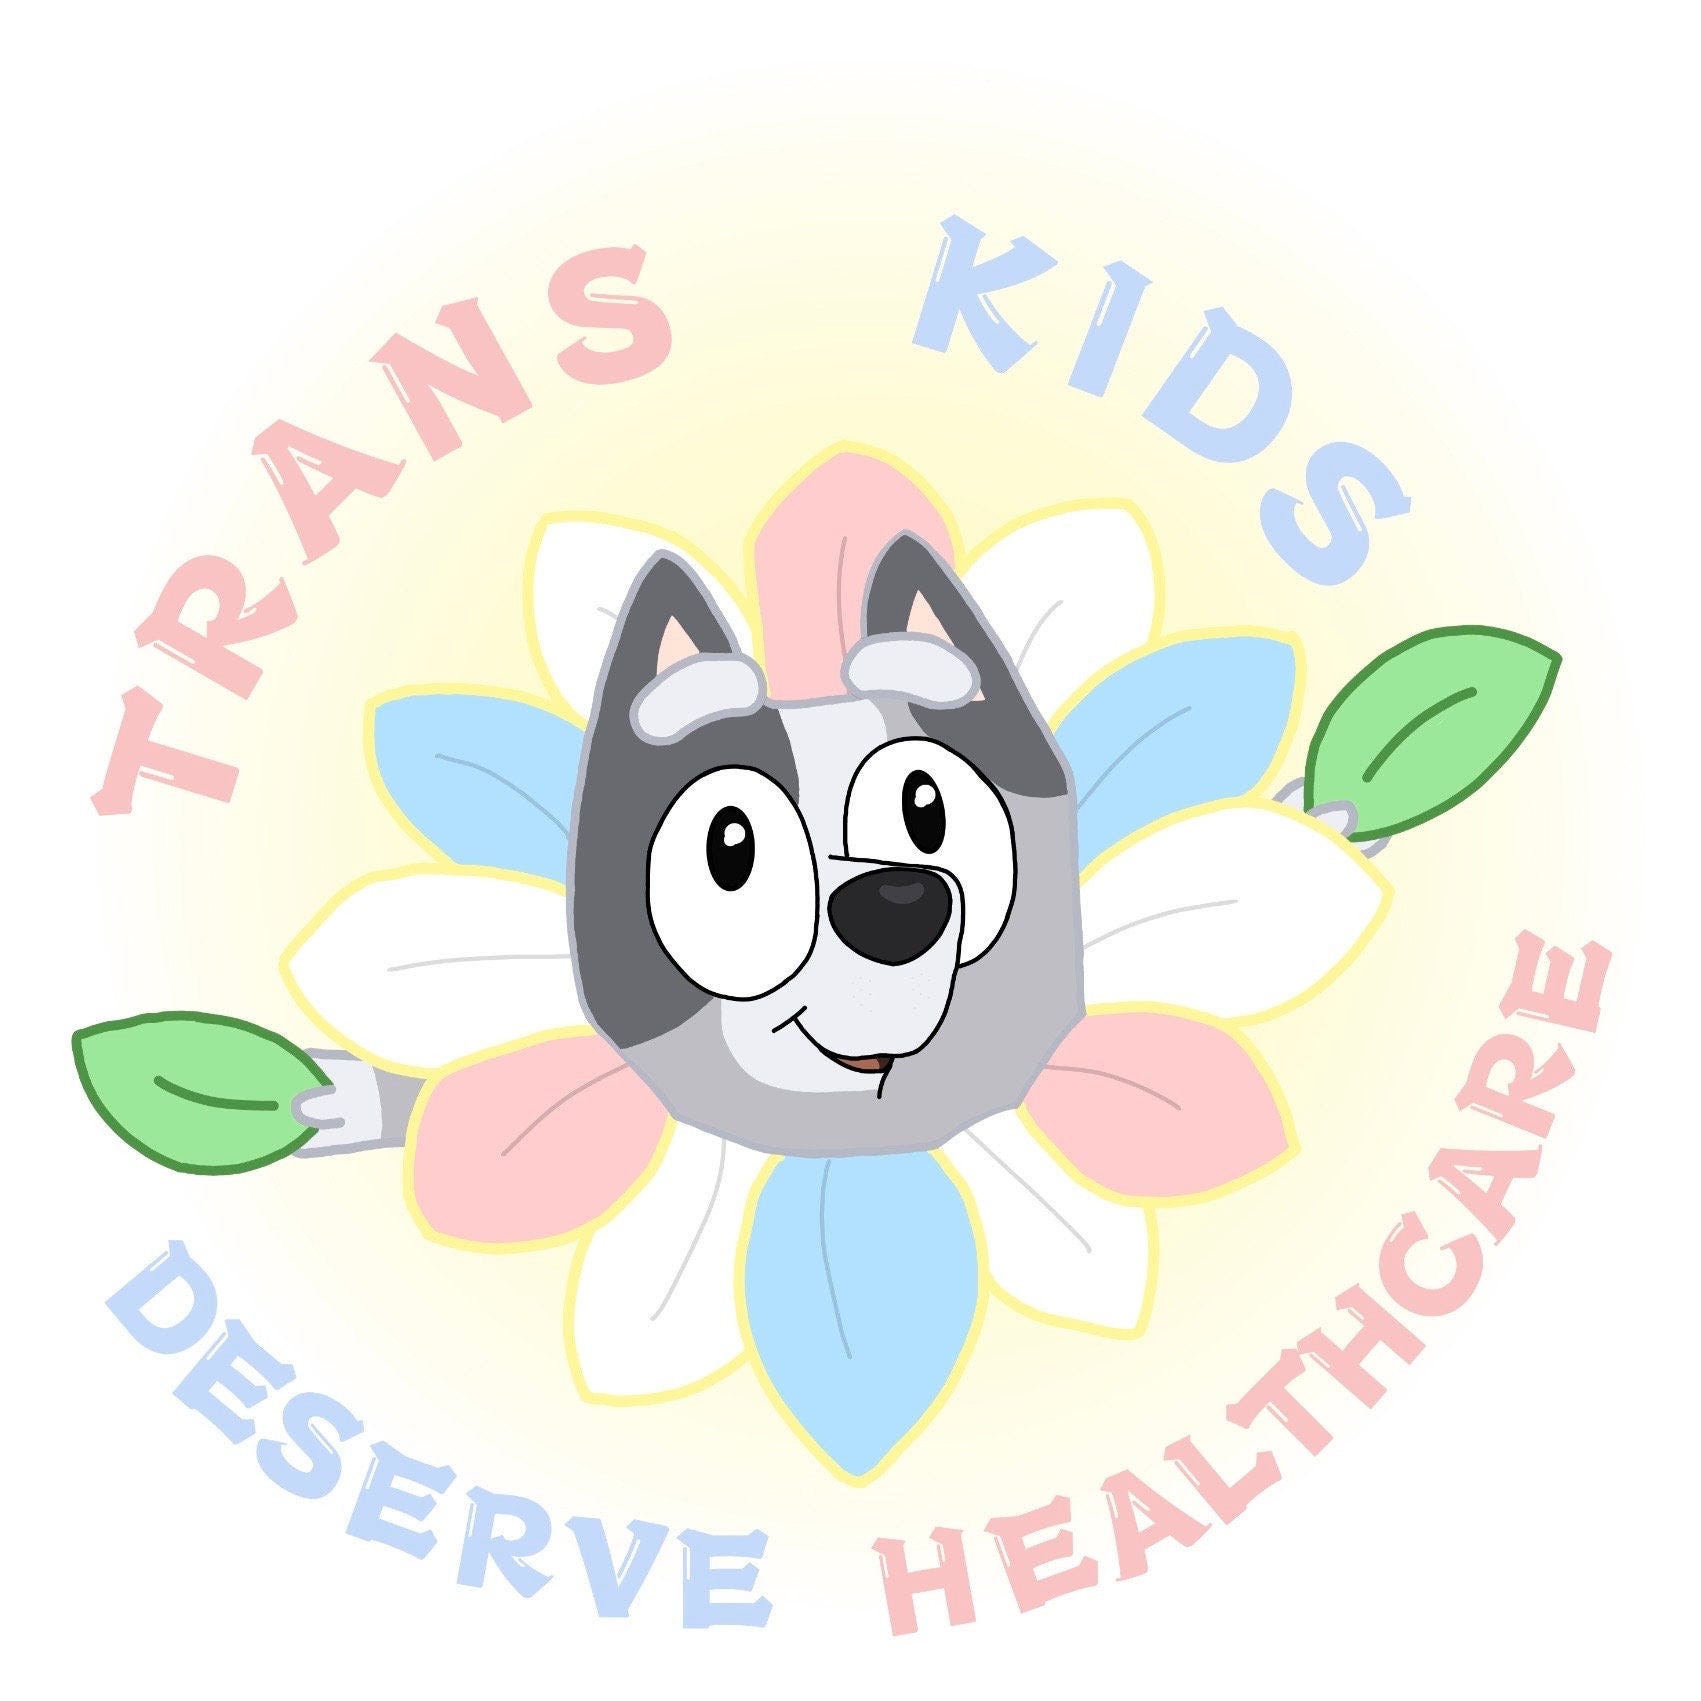 Trans Kids Deserve Healthcare Muffin waterproof Sticker